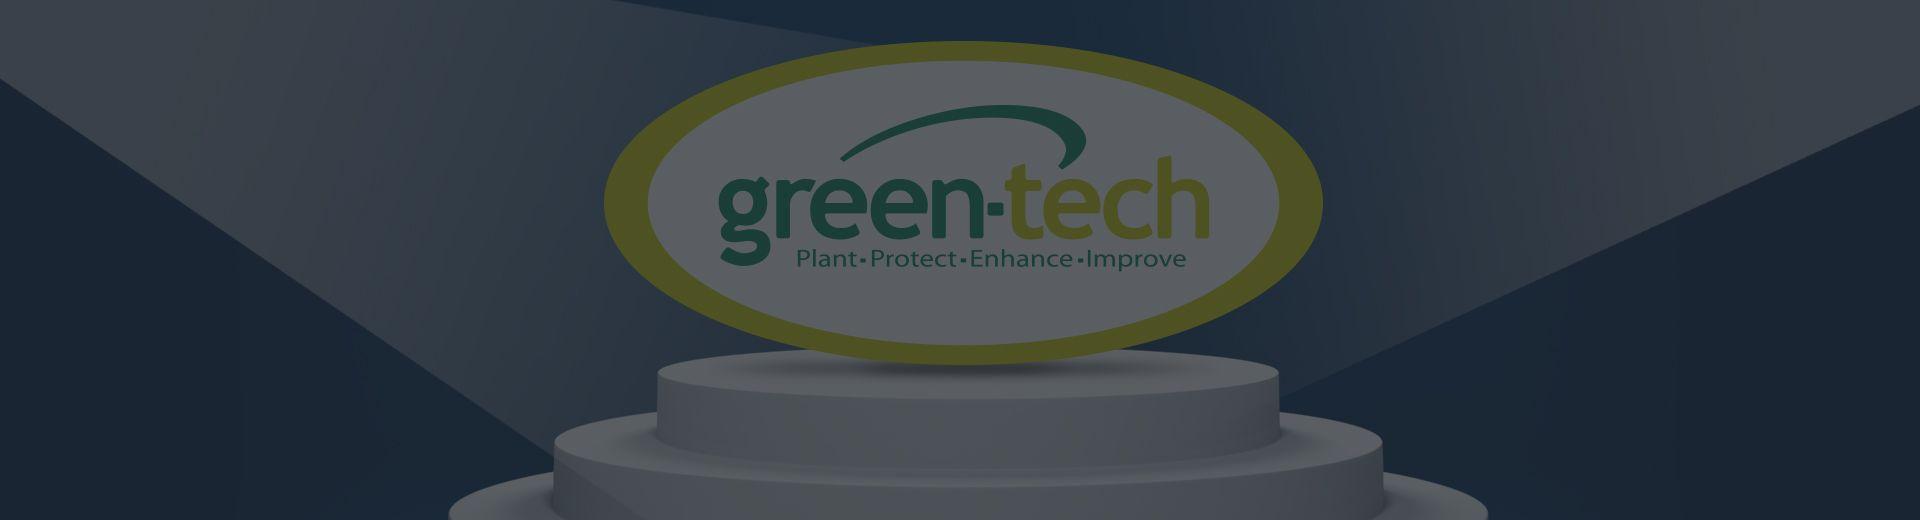 Gray and Green Circle Logo - Landscaping Suppliers - Wholesale Garden Supplies | Green-tech